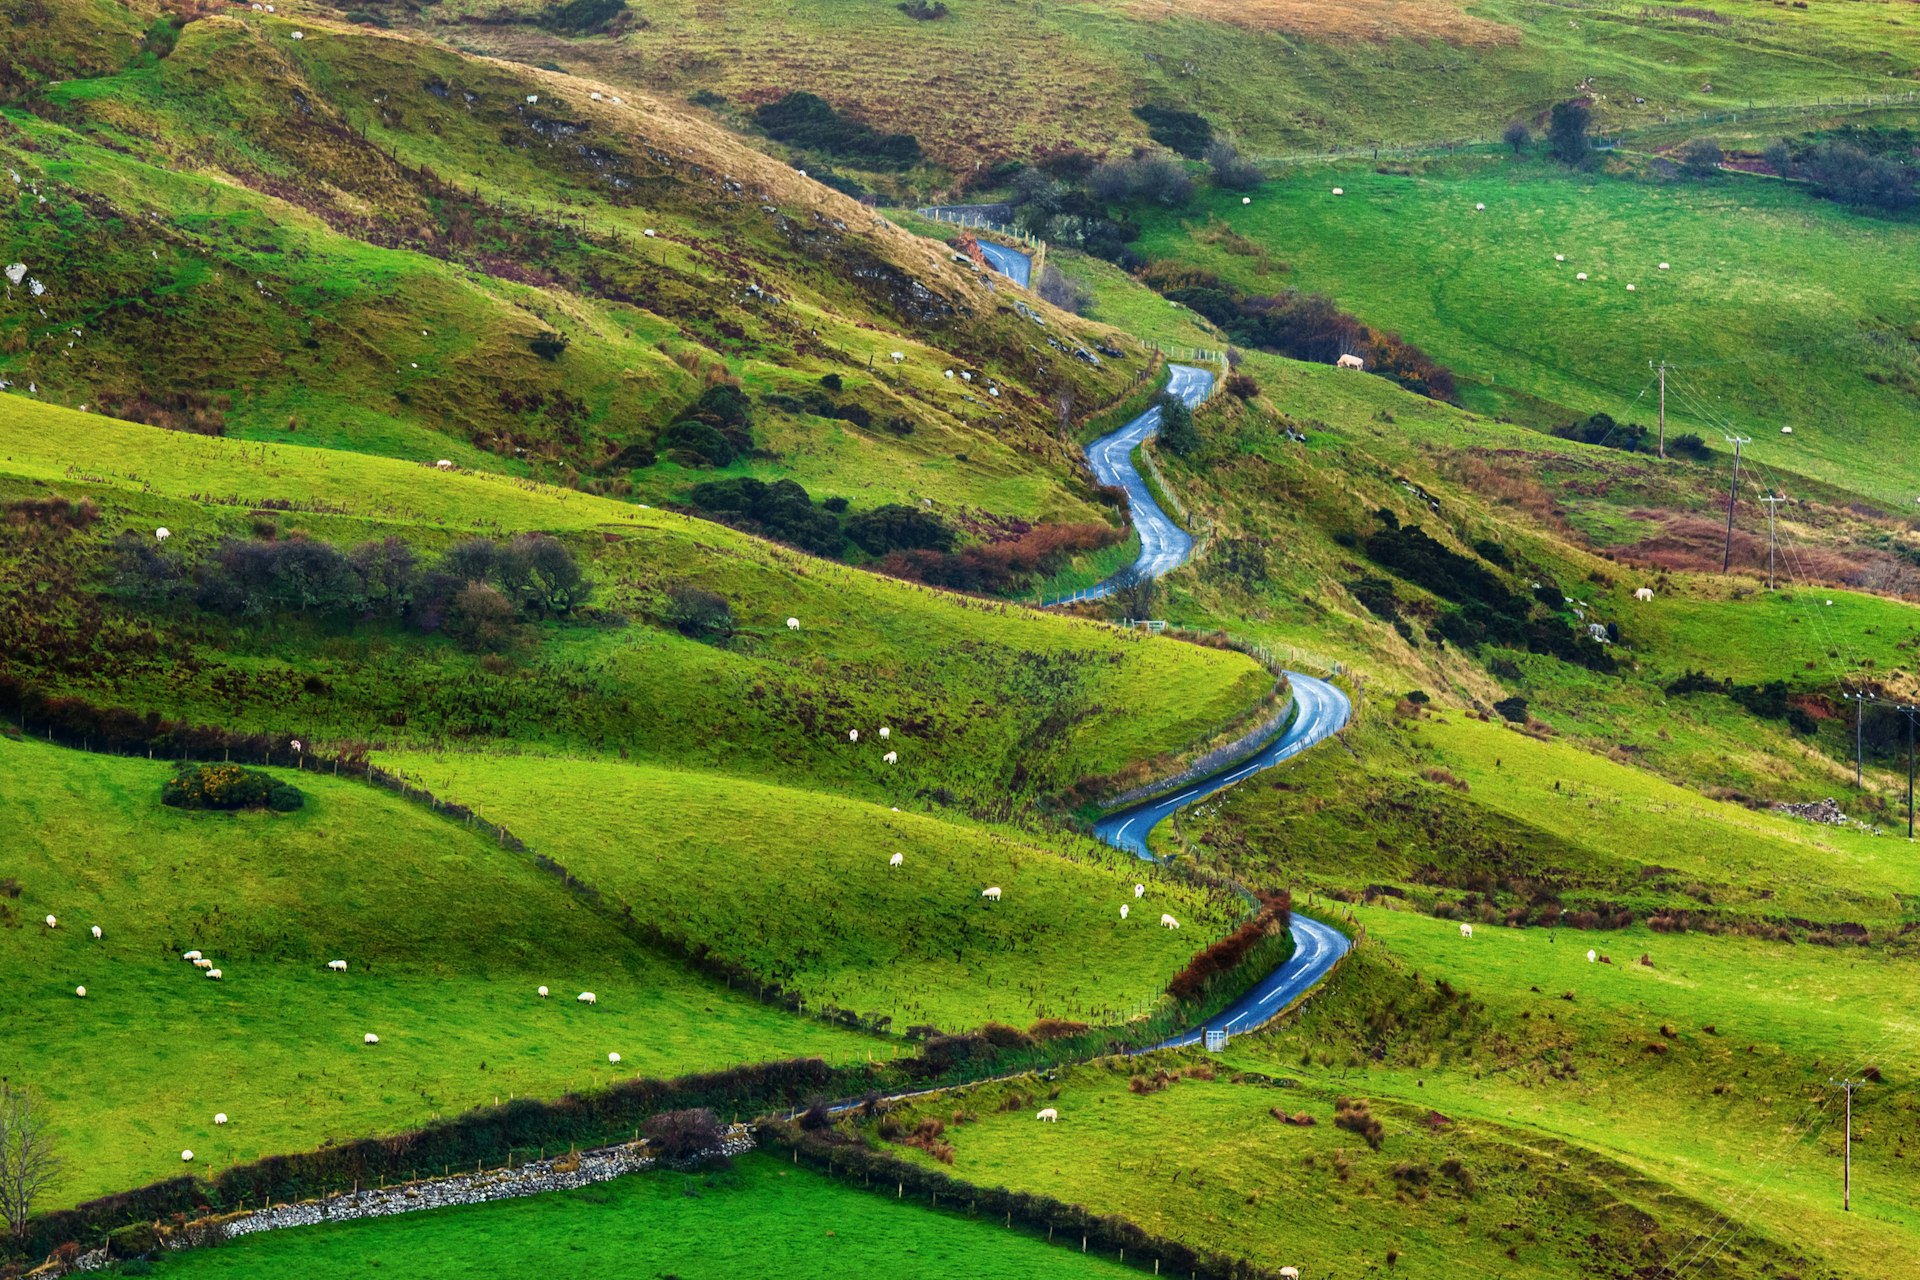 Winding road through the lush green Irish landscape. 